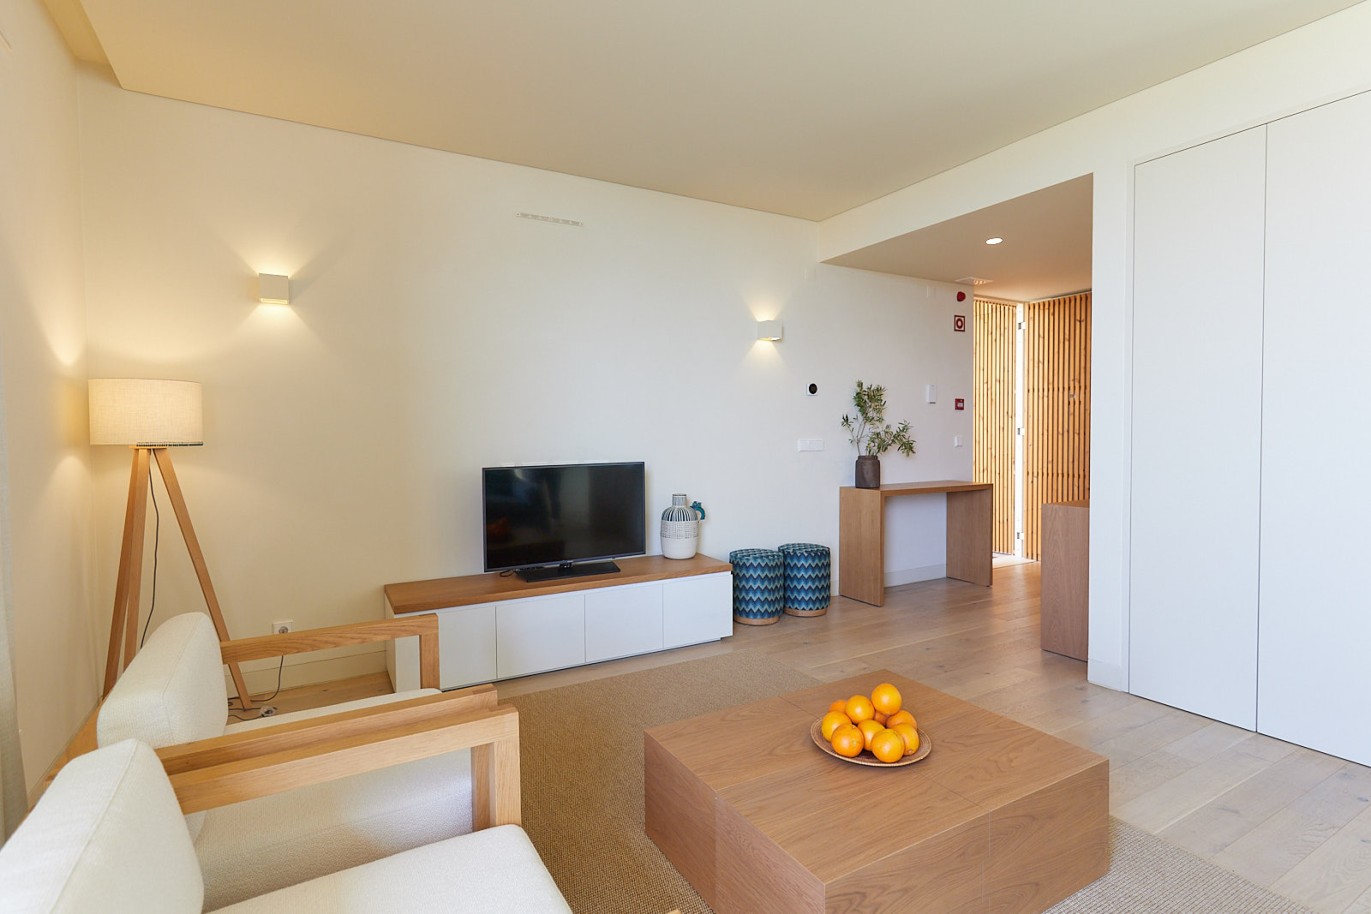 2 bedroom apartment in resort, for sale in Porches, Algarve_228894